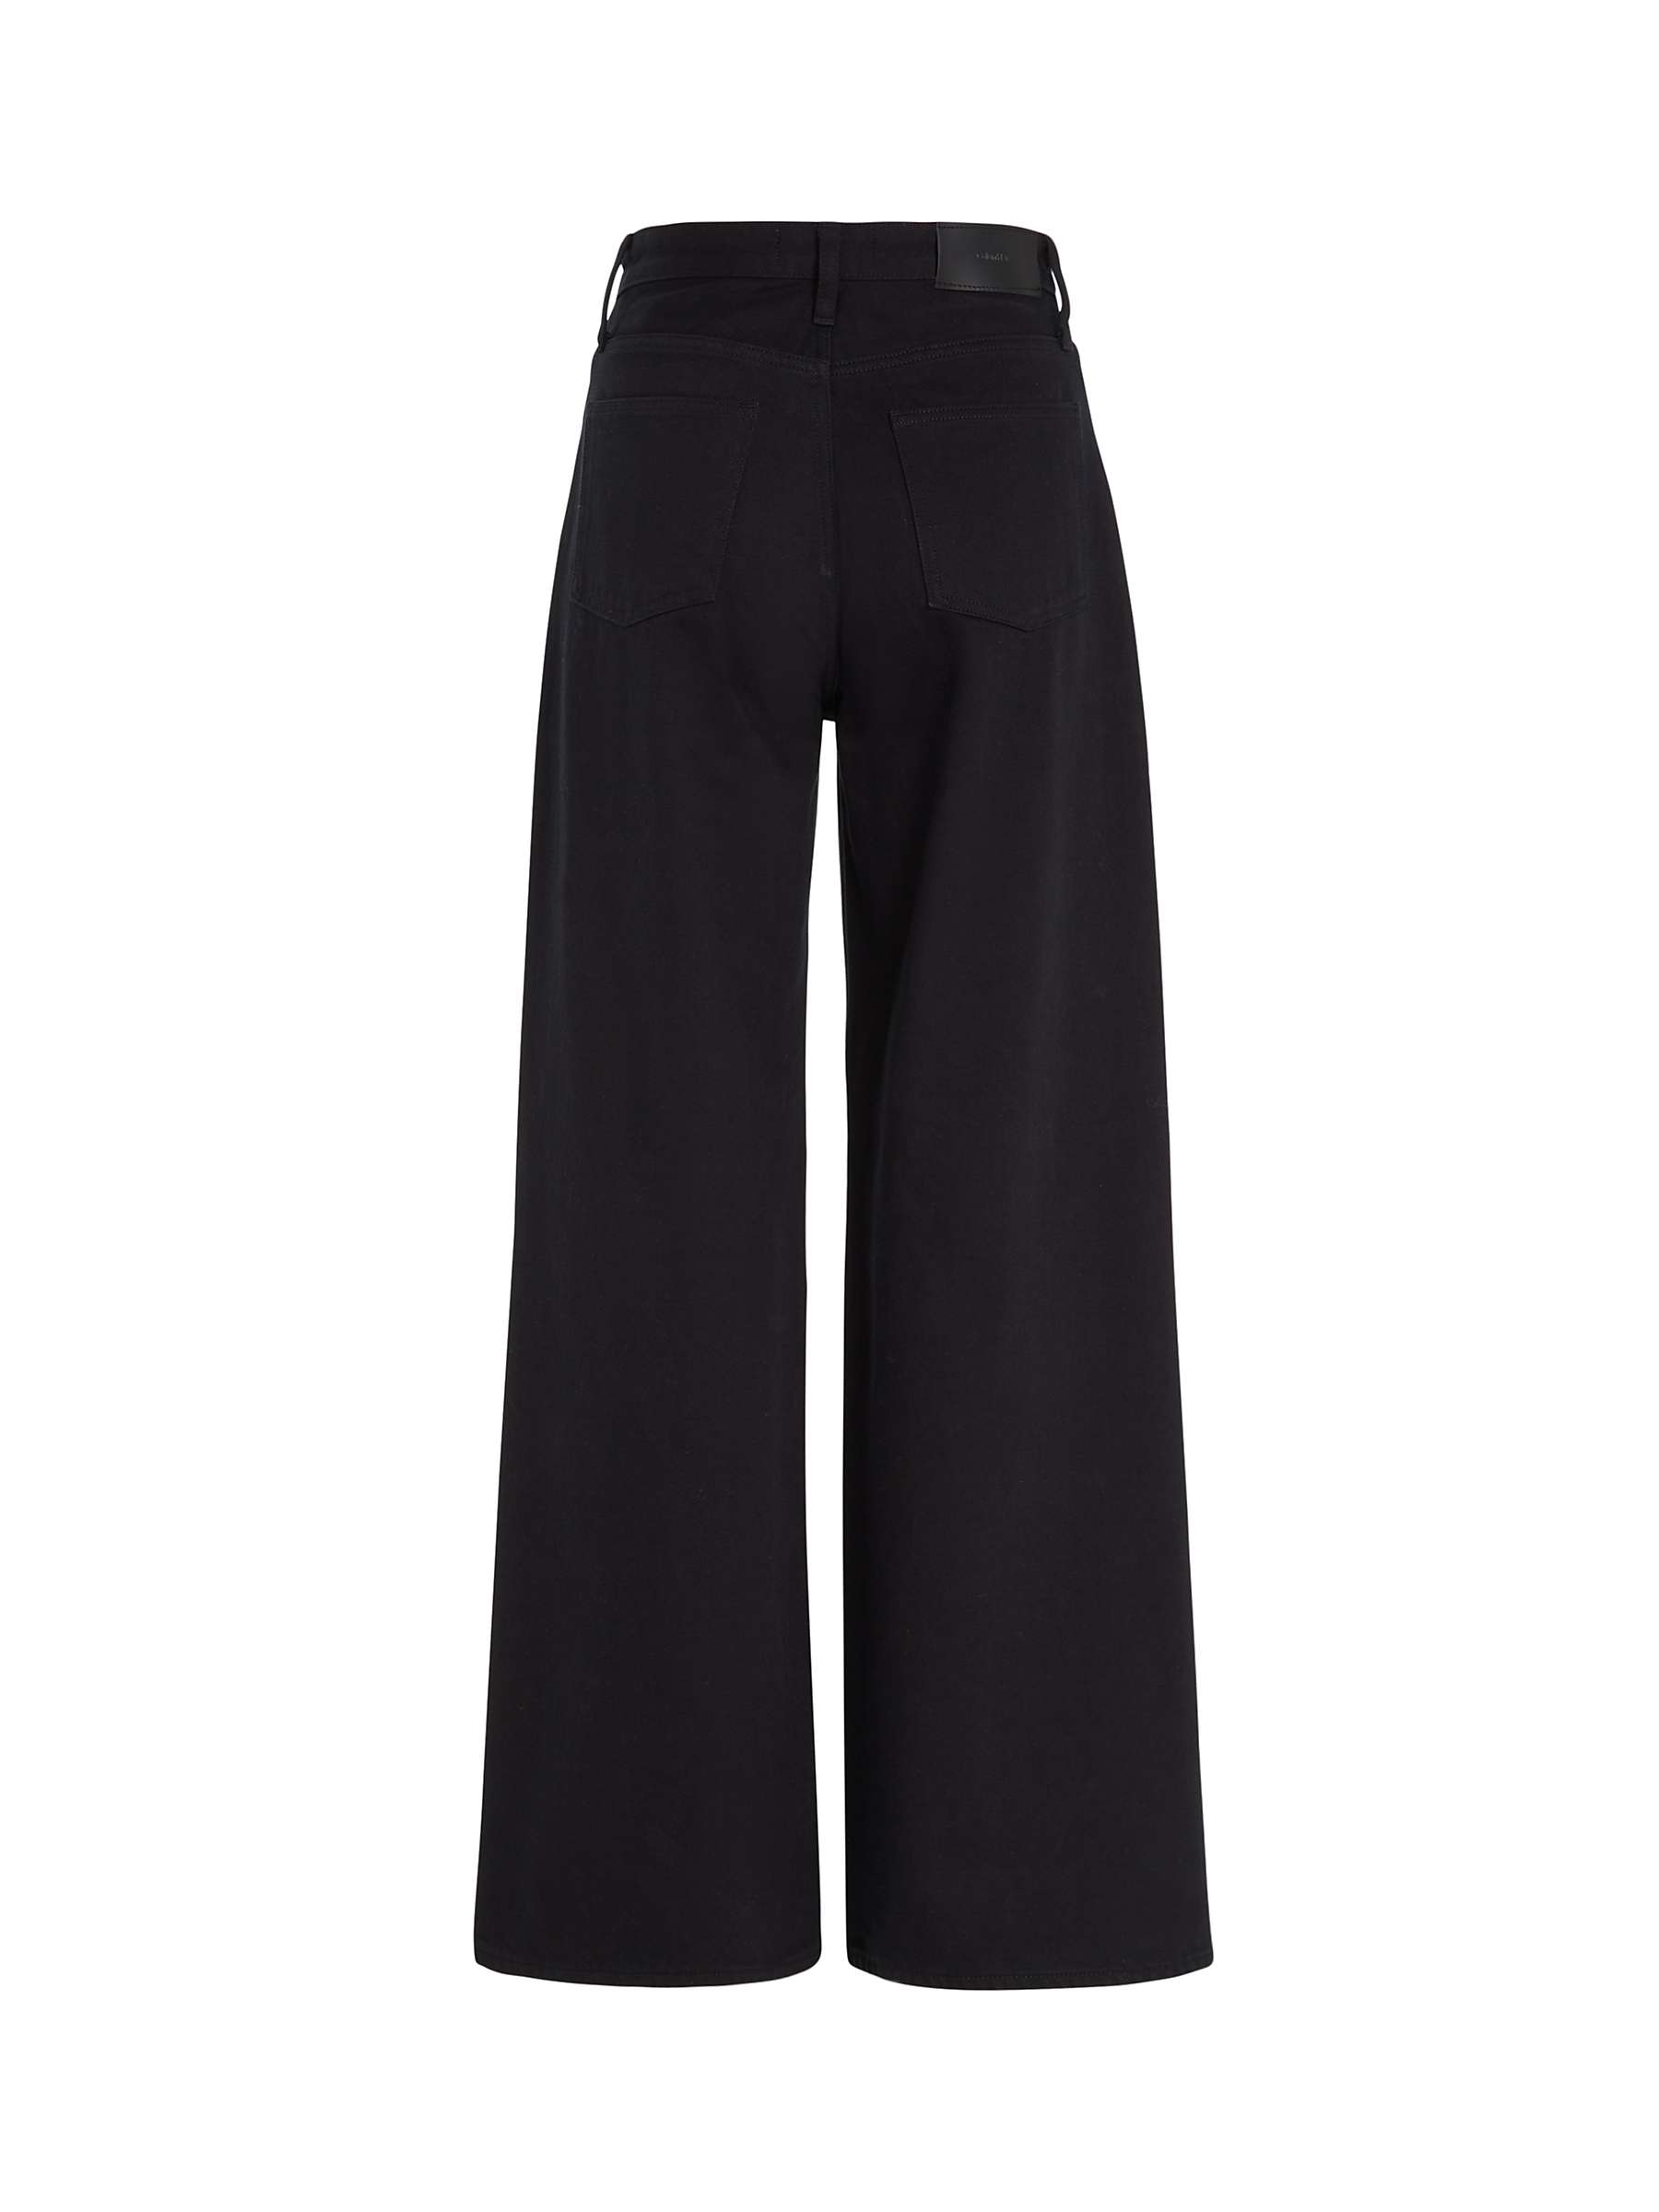 Buy Calvin Klein Infinite Wide Leg Jeans, Denim Black Online at johnlewis.com